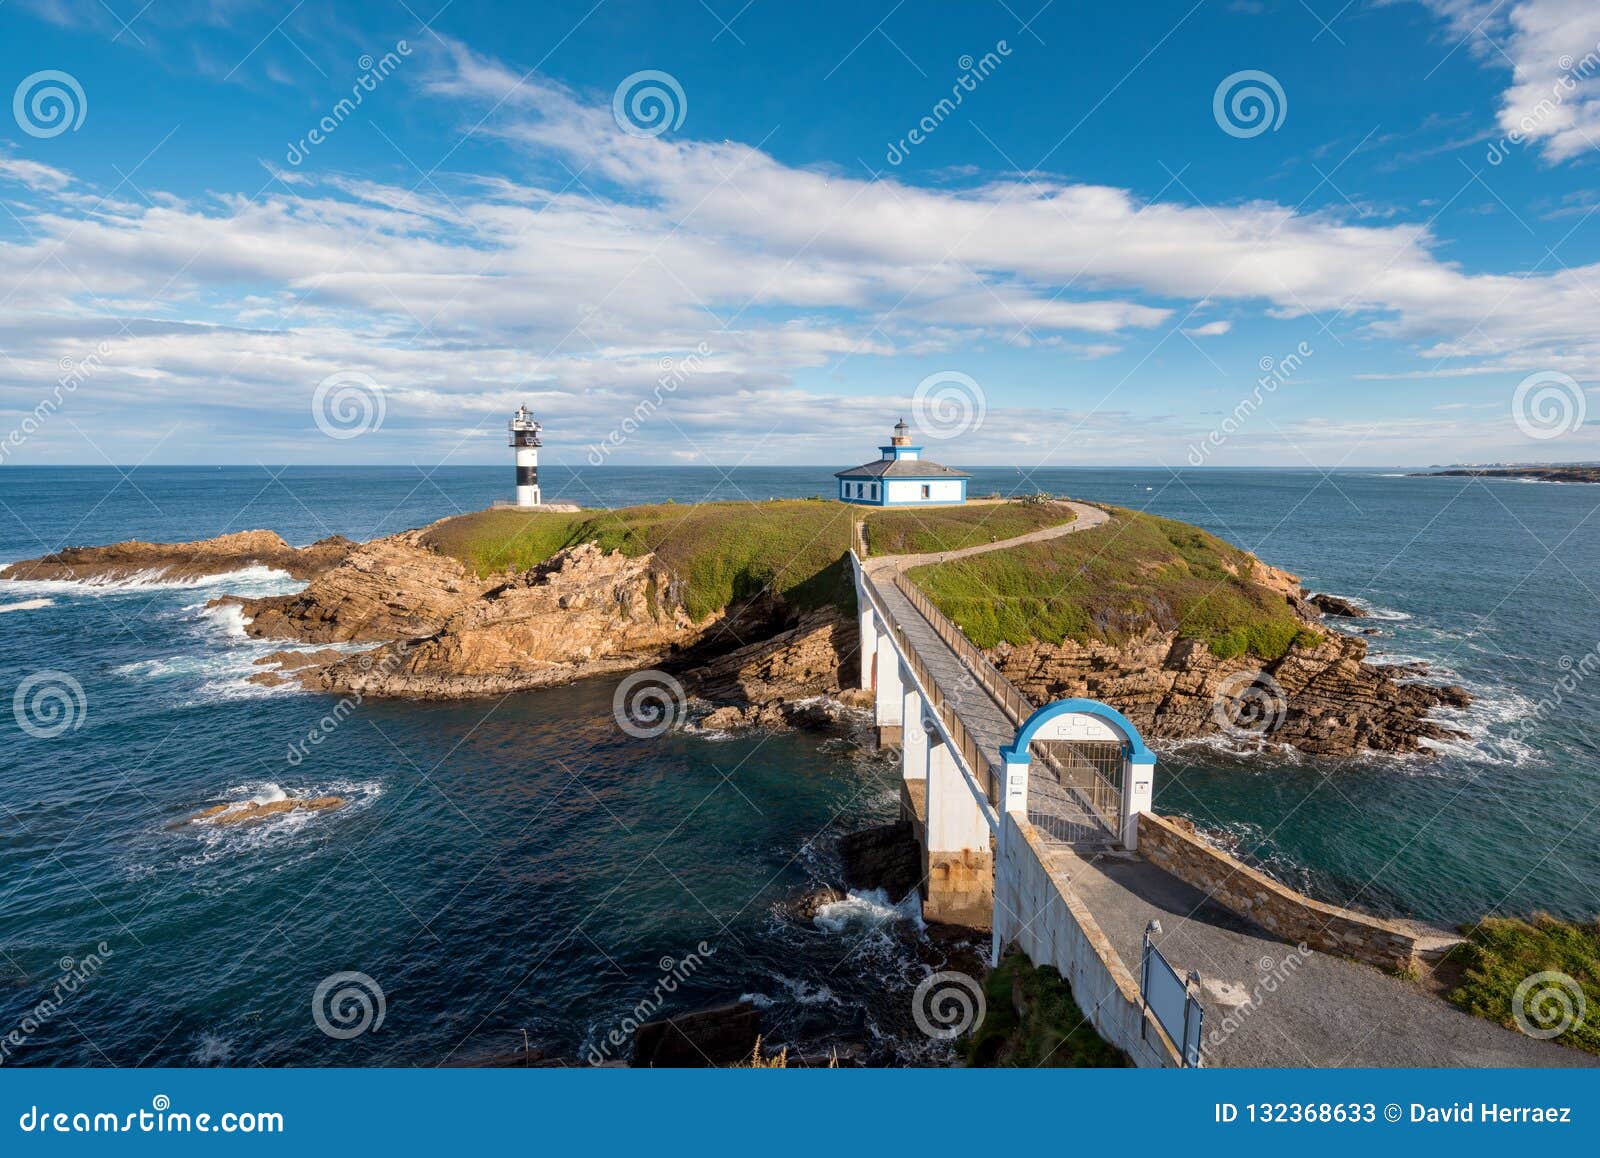 pancha island lighthouse in ribadeo coastline, galicia, spain